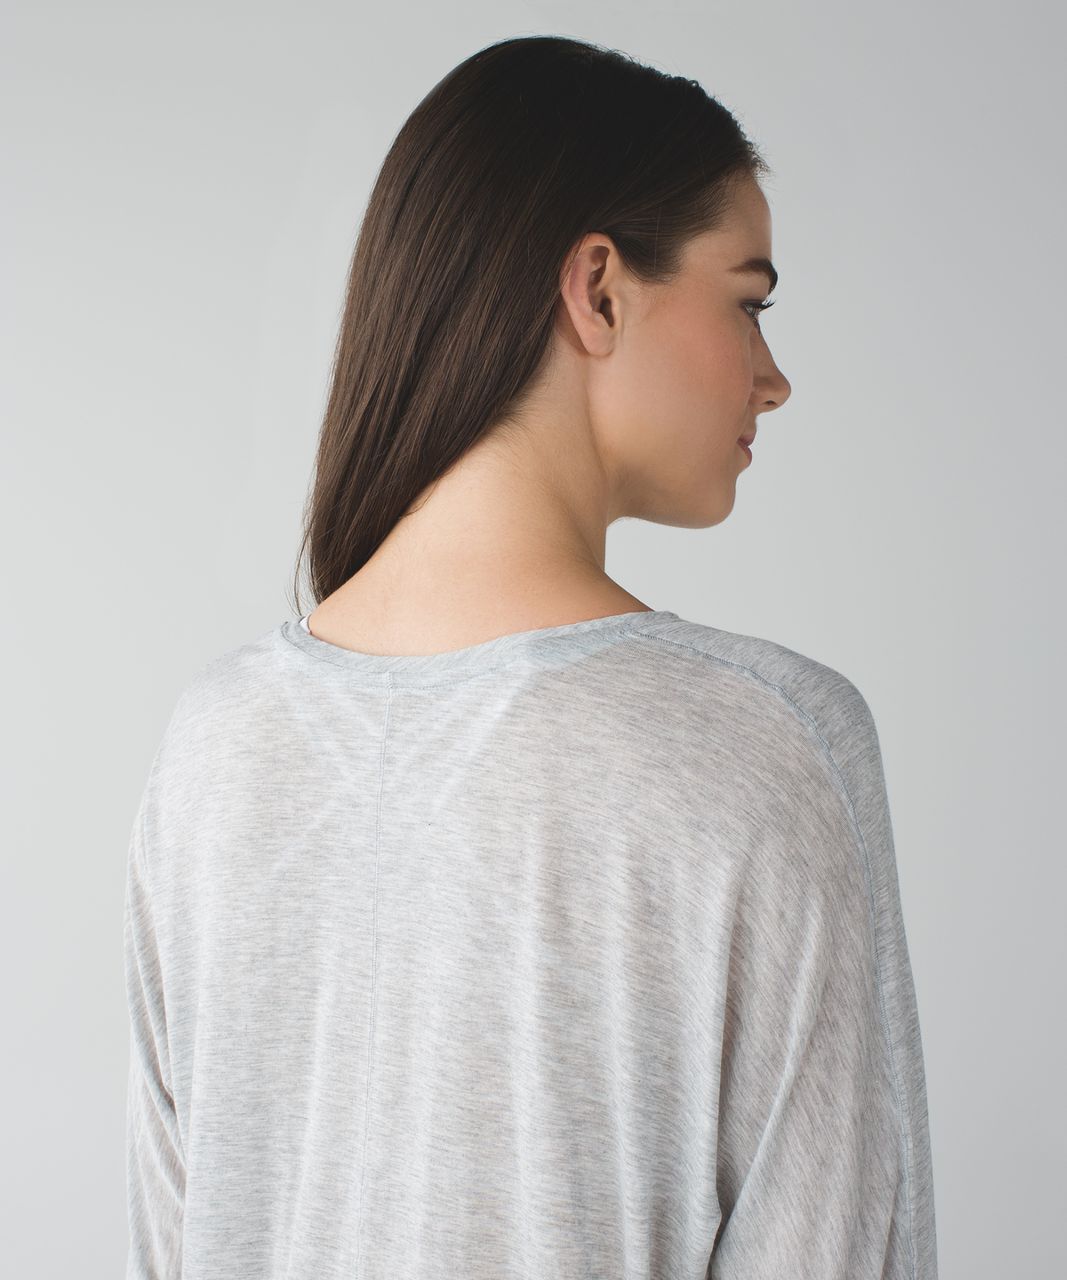 Lululemon Made To Layer Long Sleeve Tee - Heathered Mod Light Grey